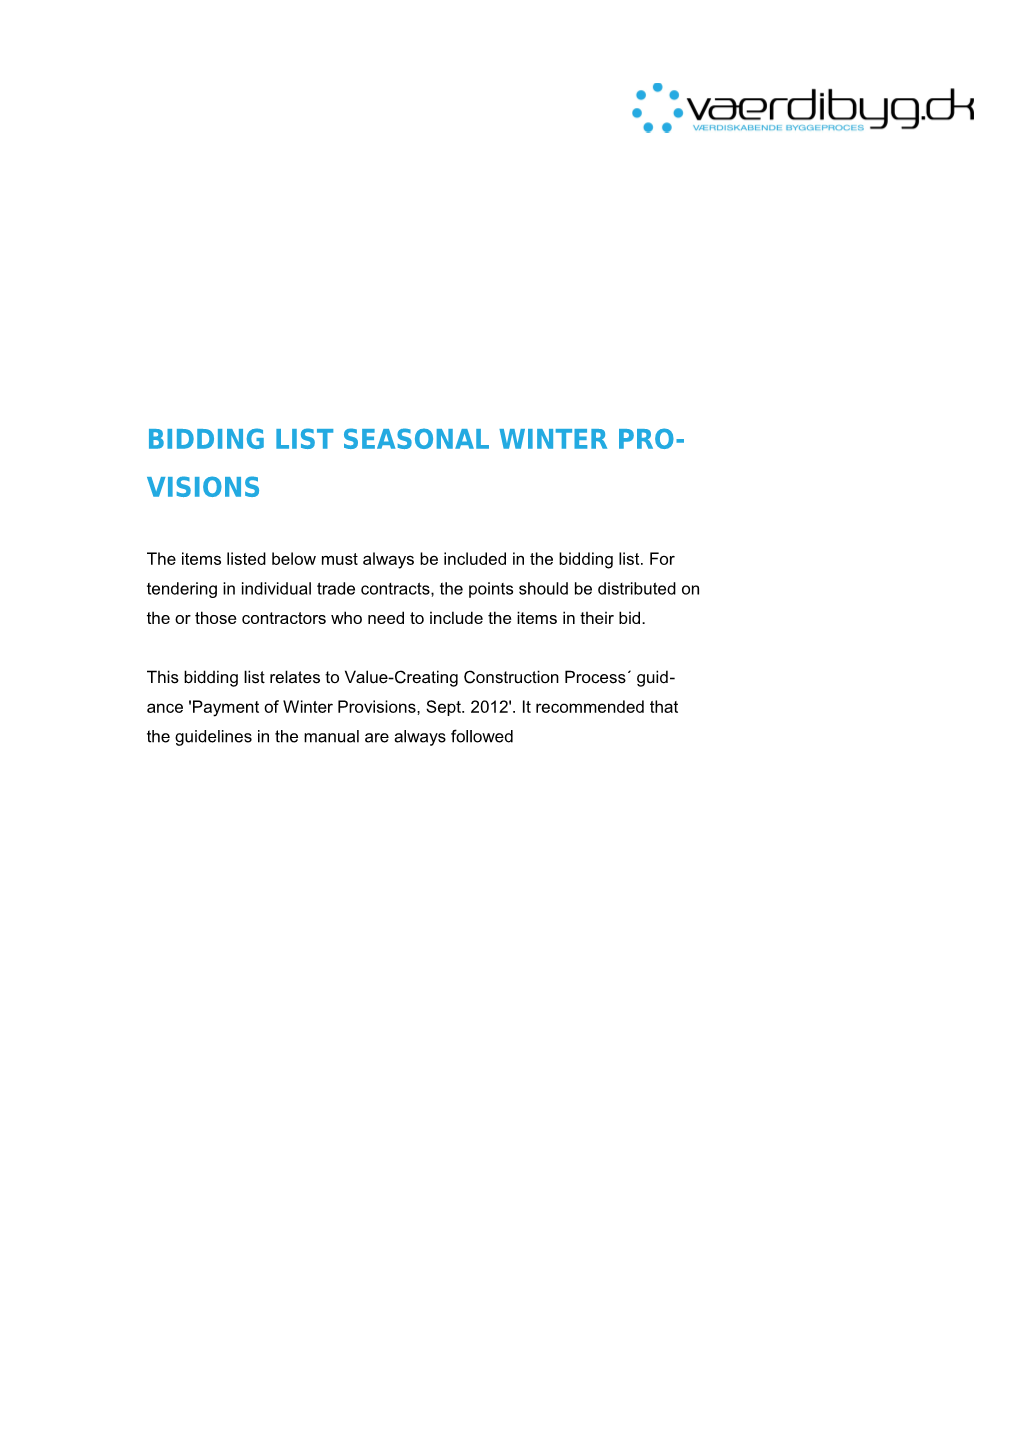 Bidding List Seasonal Winter Provisions